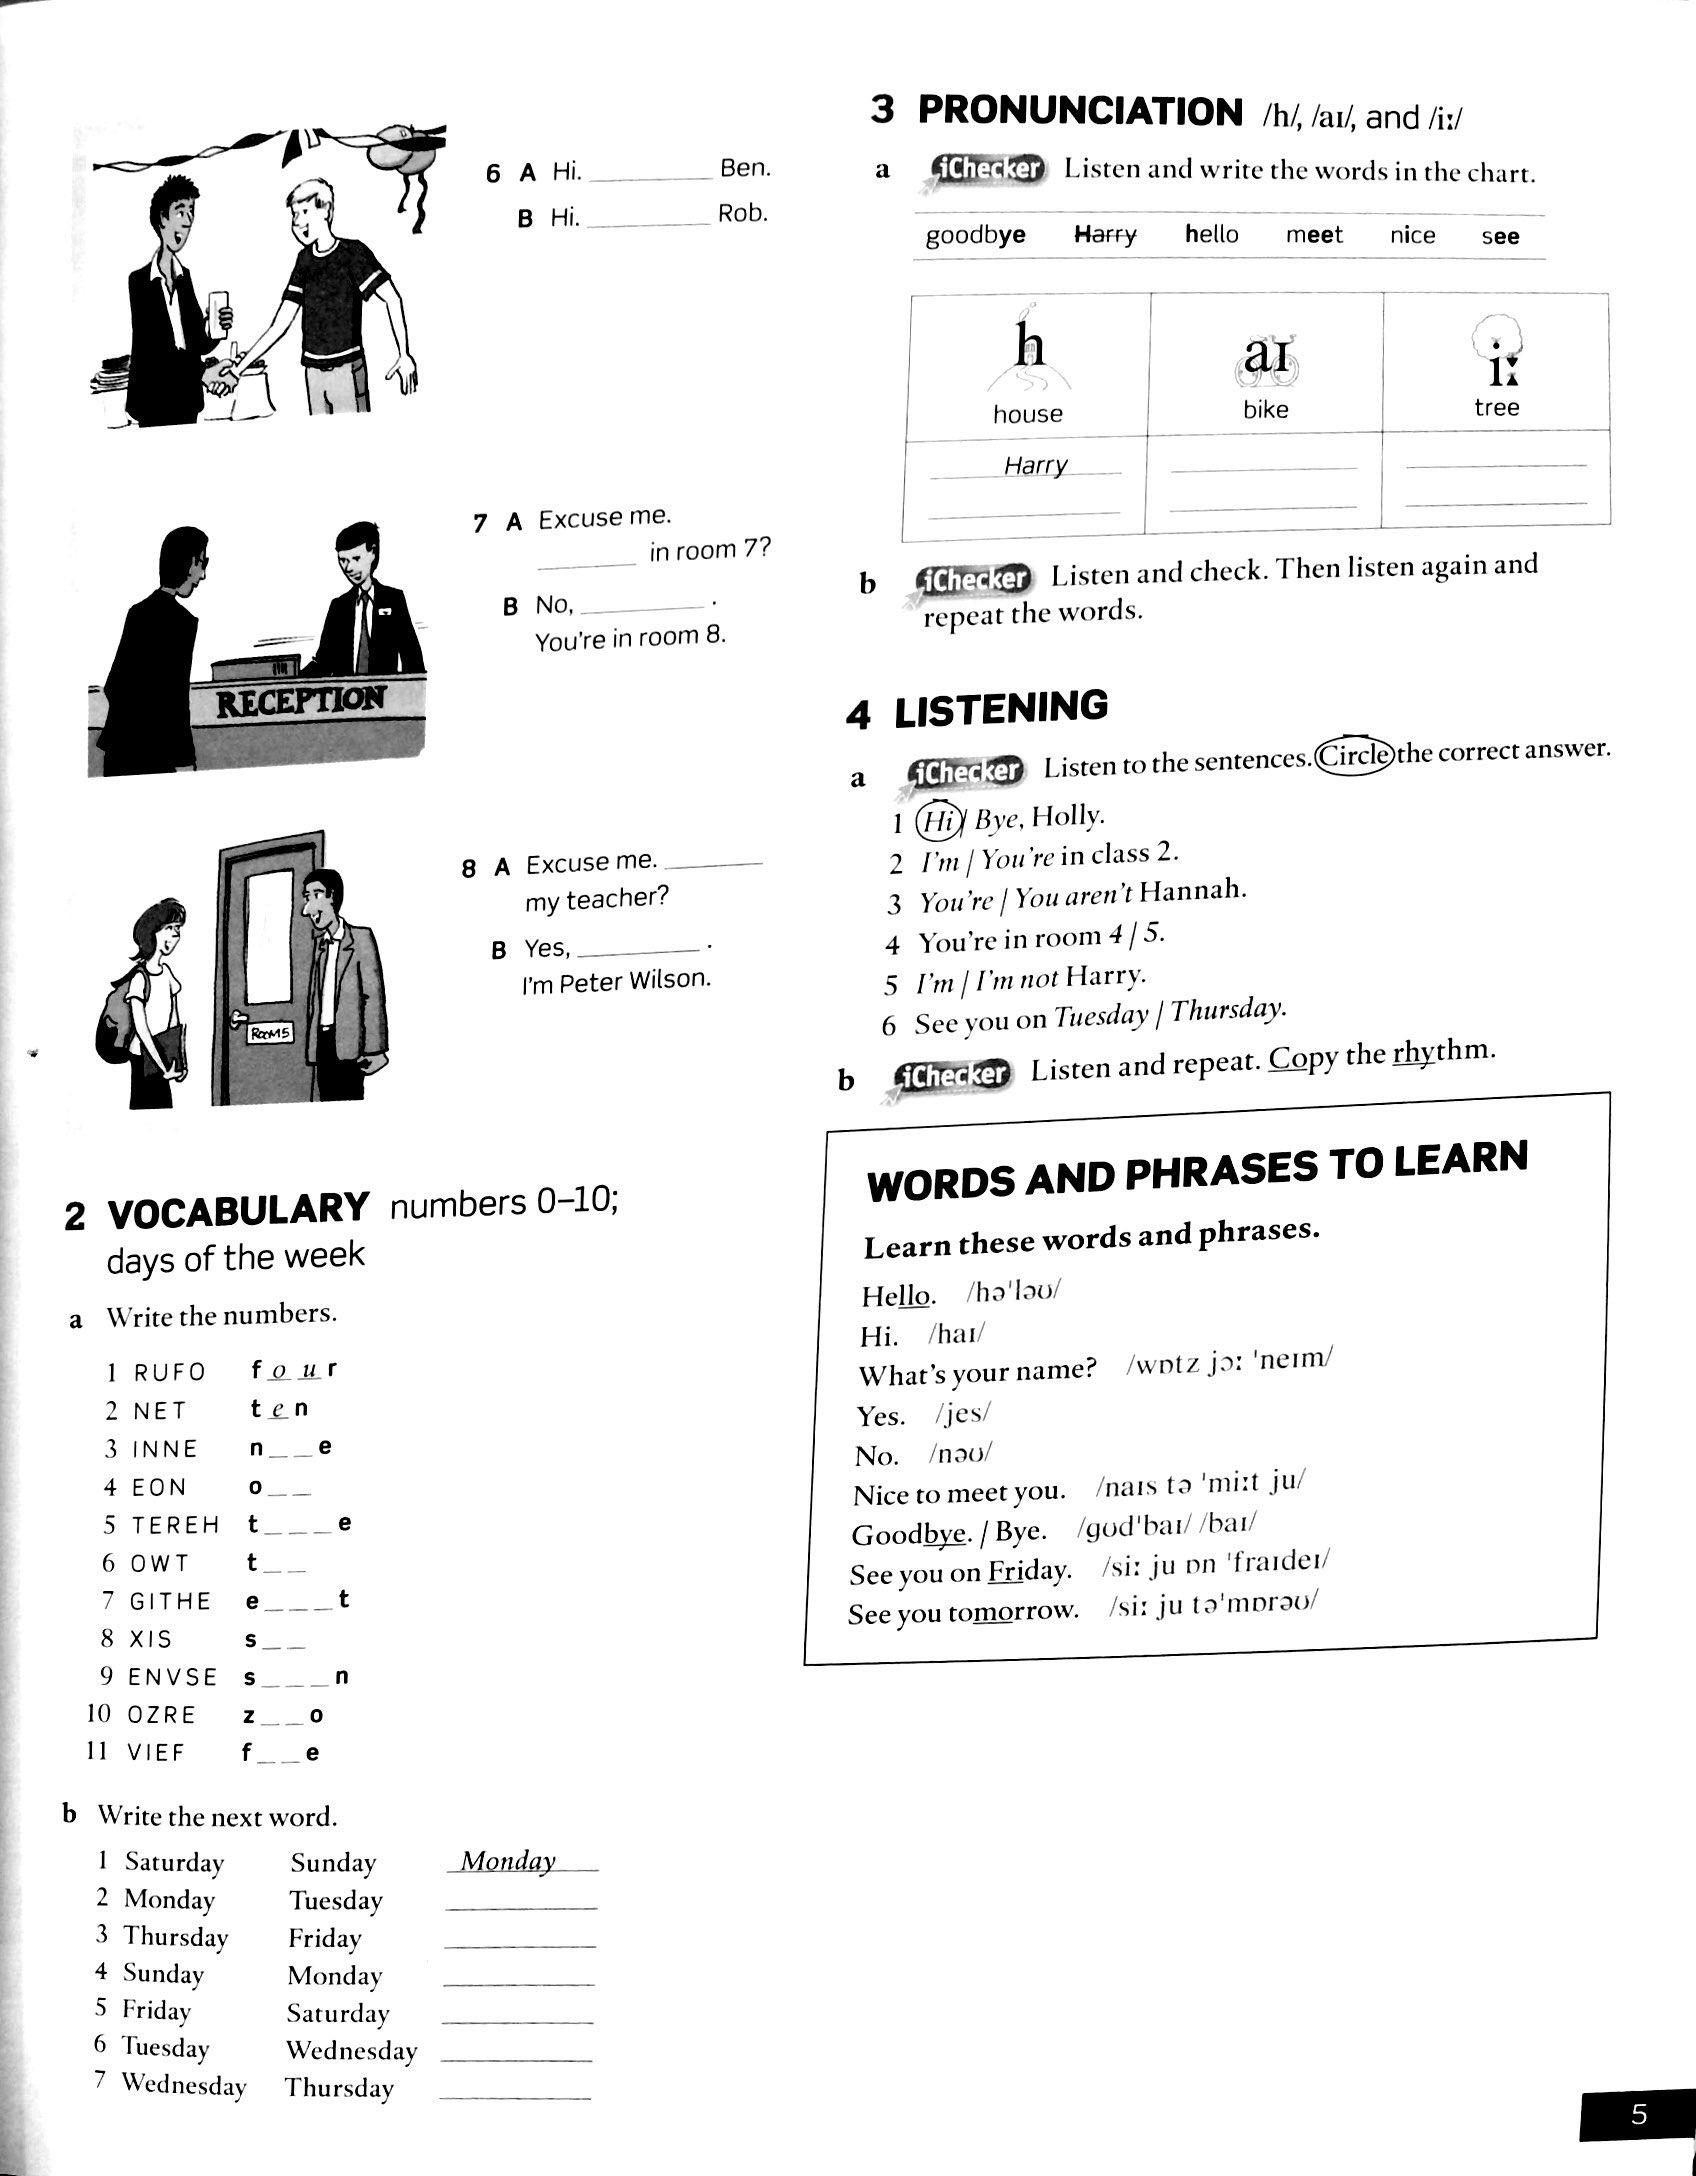 English File: Beginner: Workbook with Key